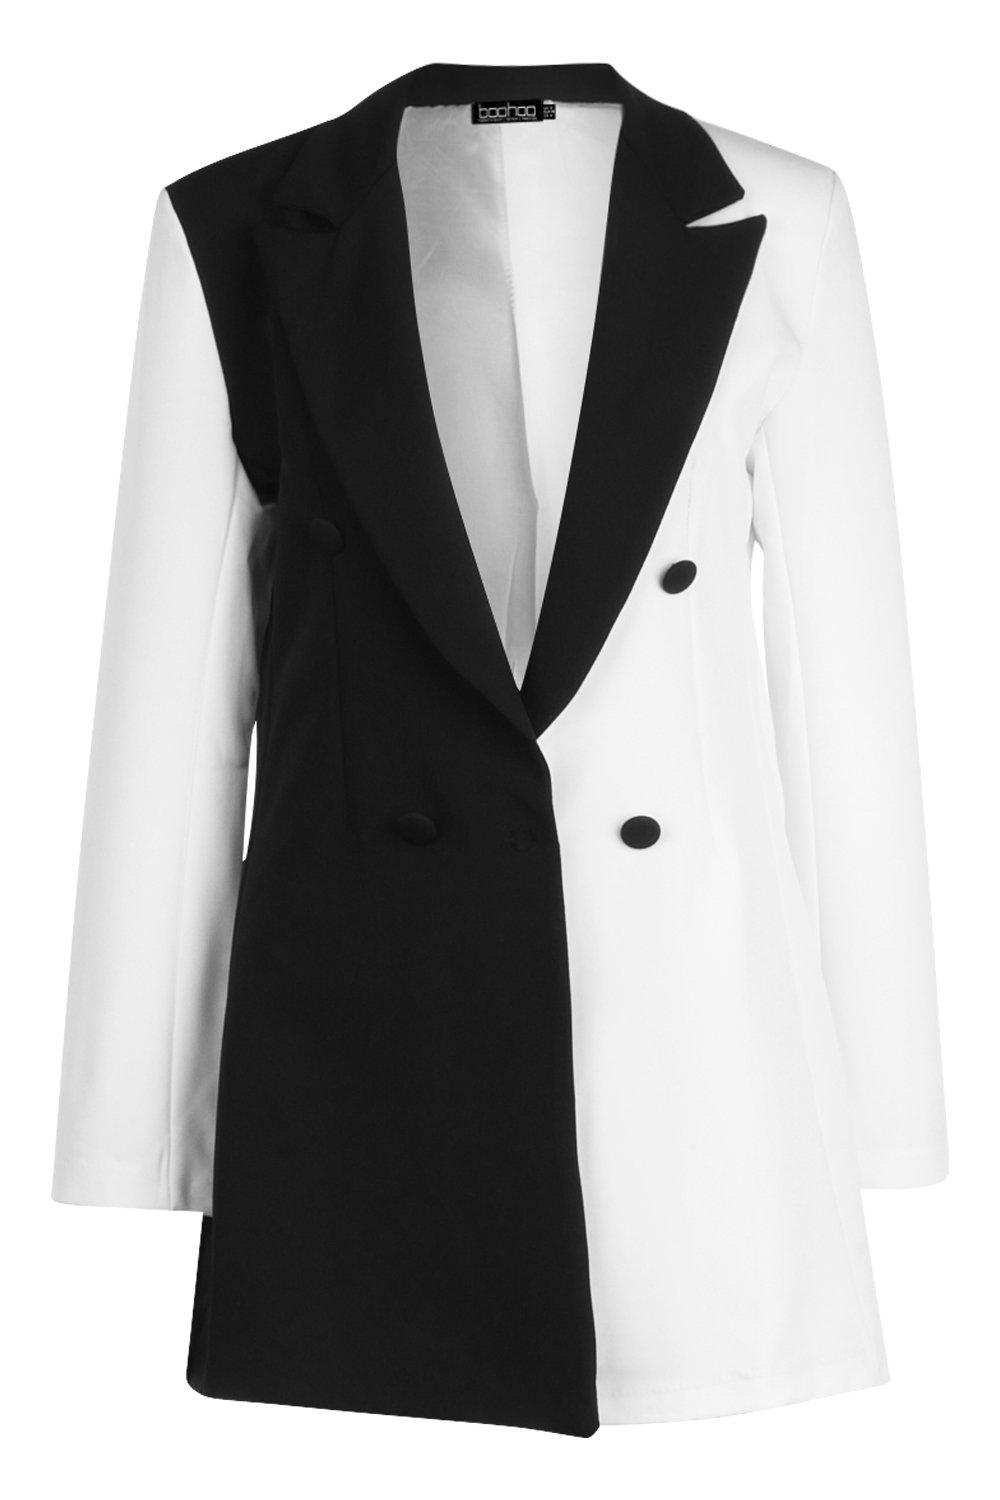 black white blazer dress